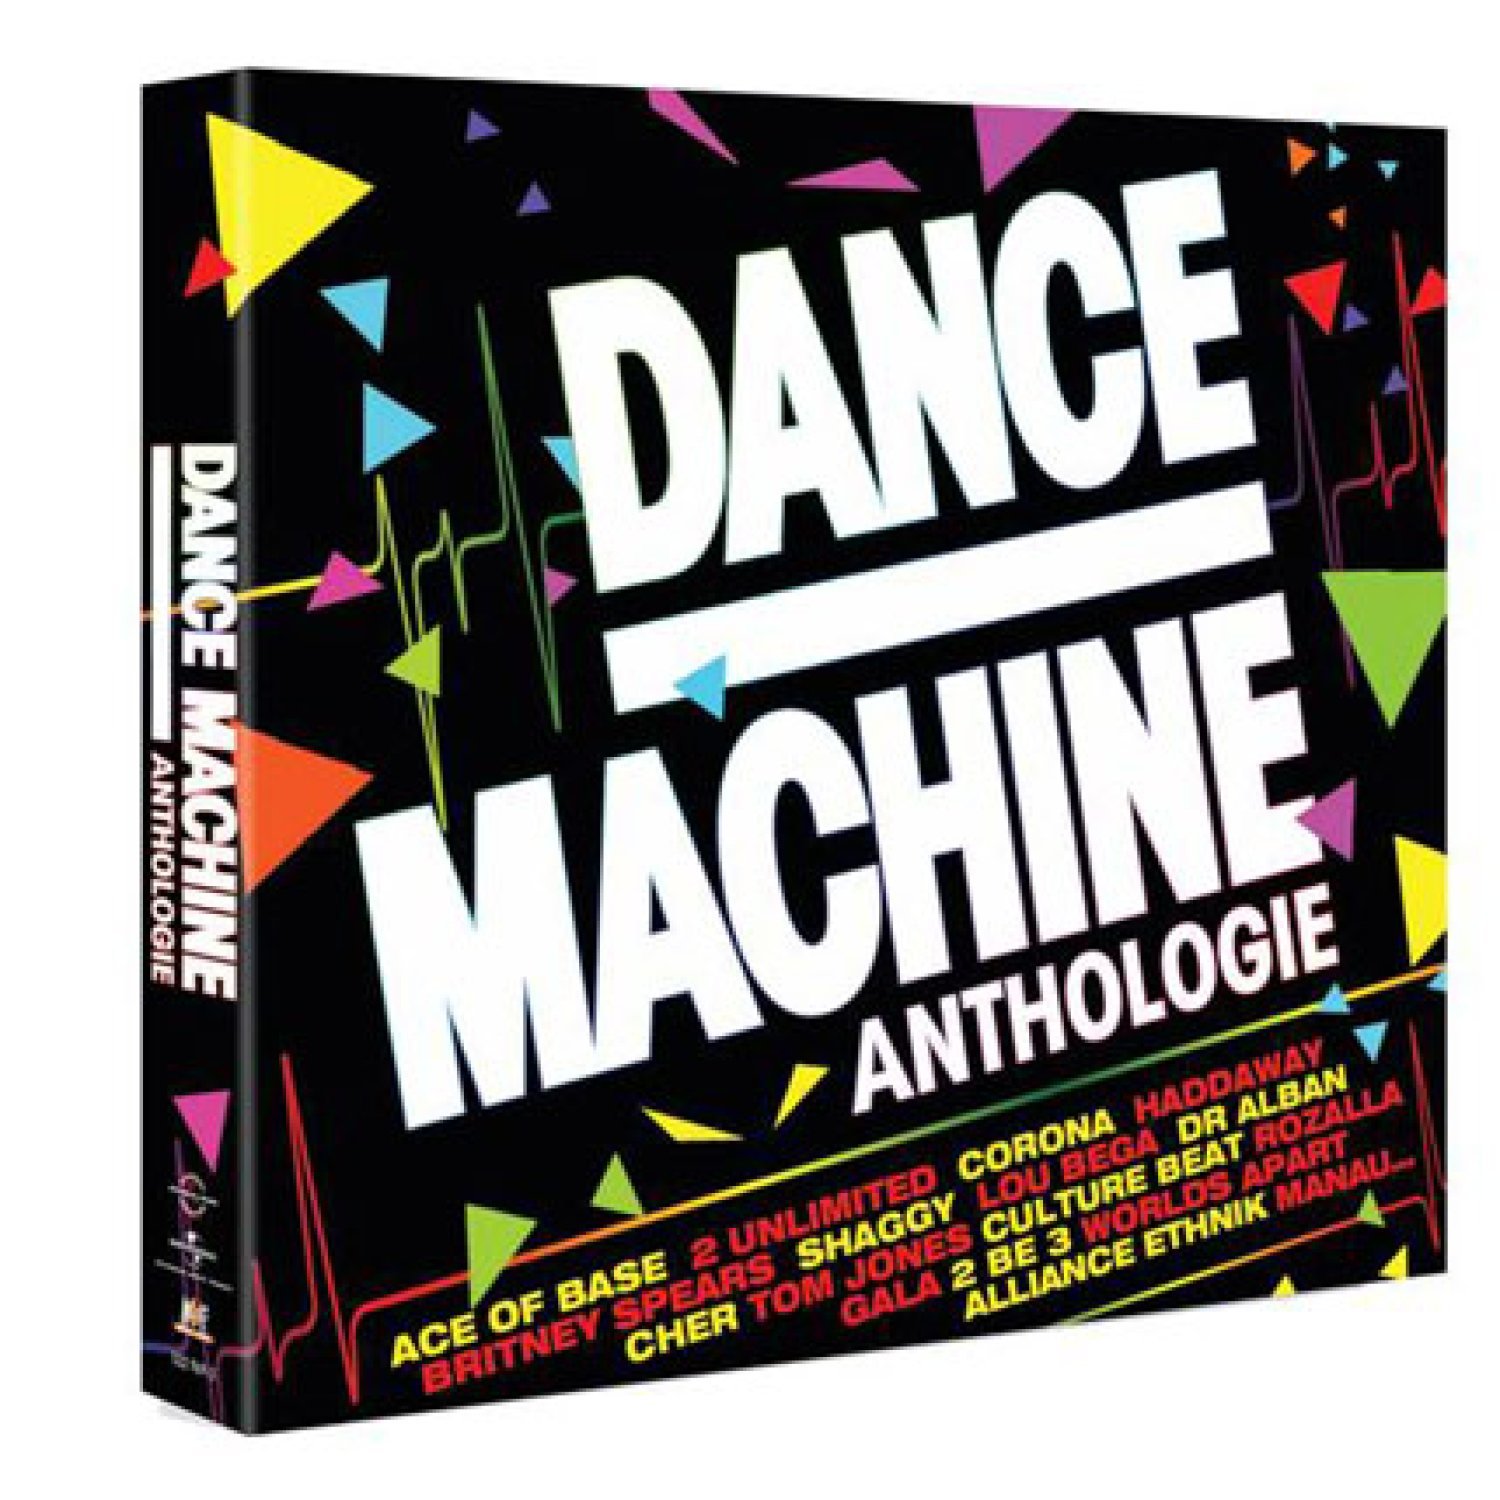 Dance machine Anthologie